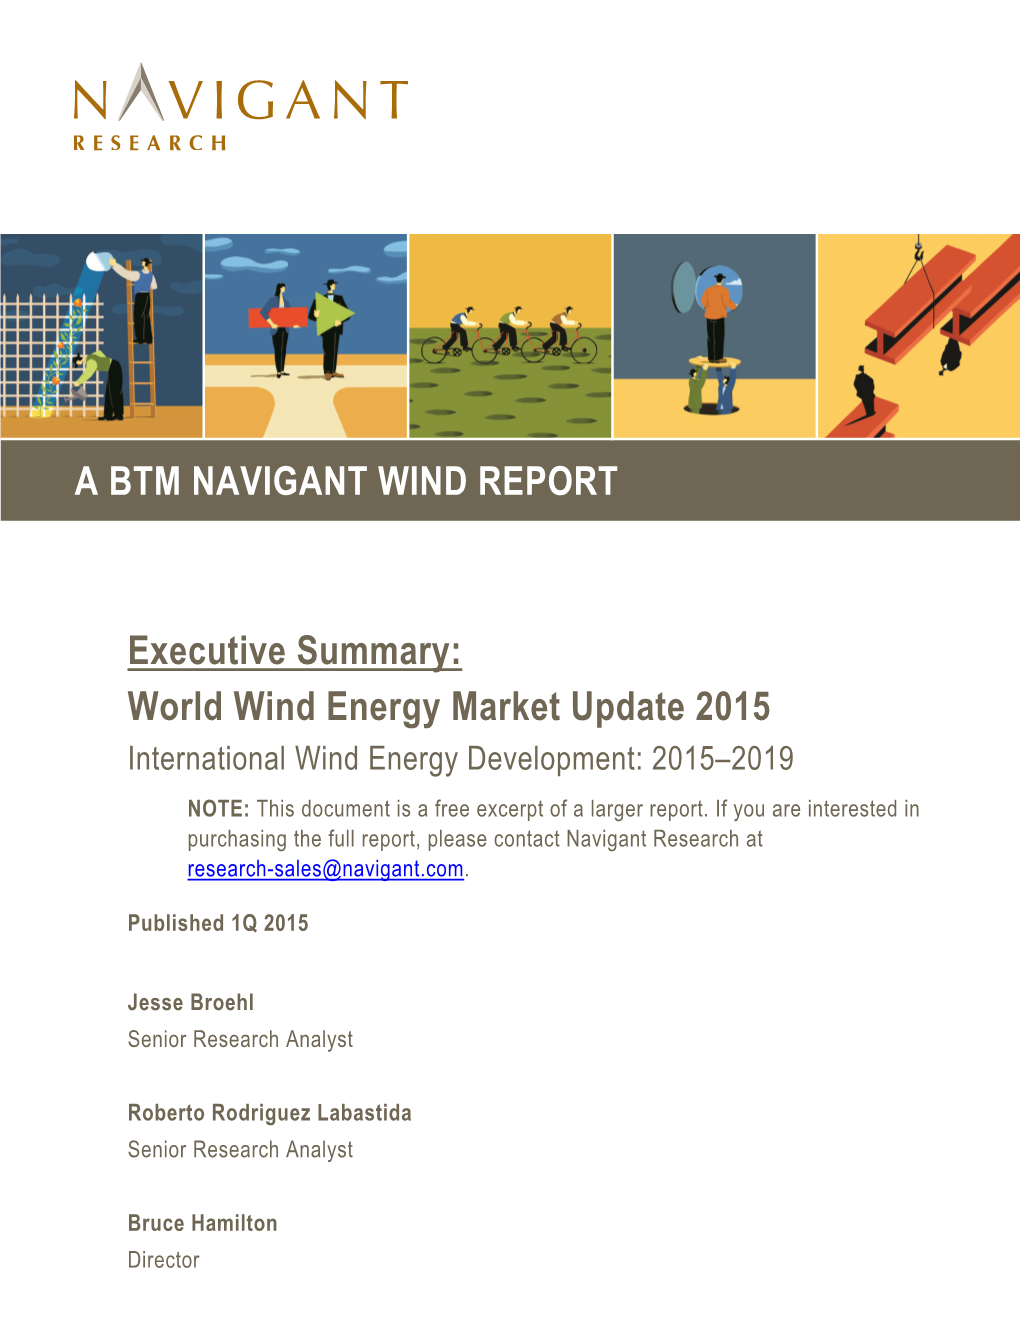 Executive Summary: World Wind Energy Market Update 2015 a BTM